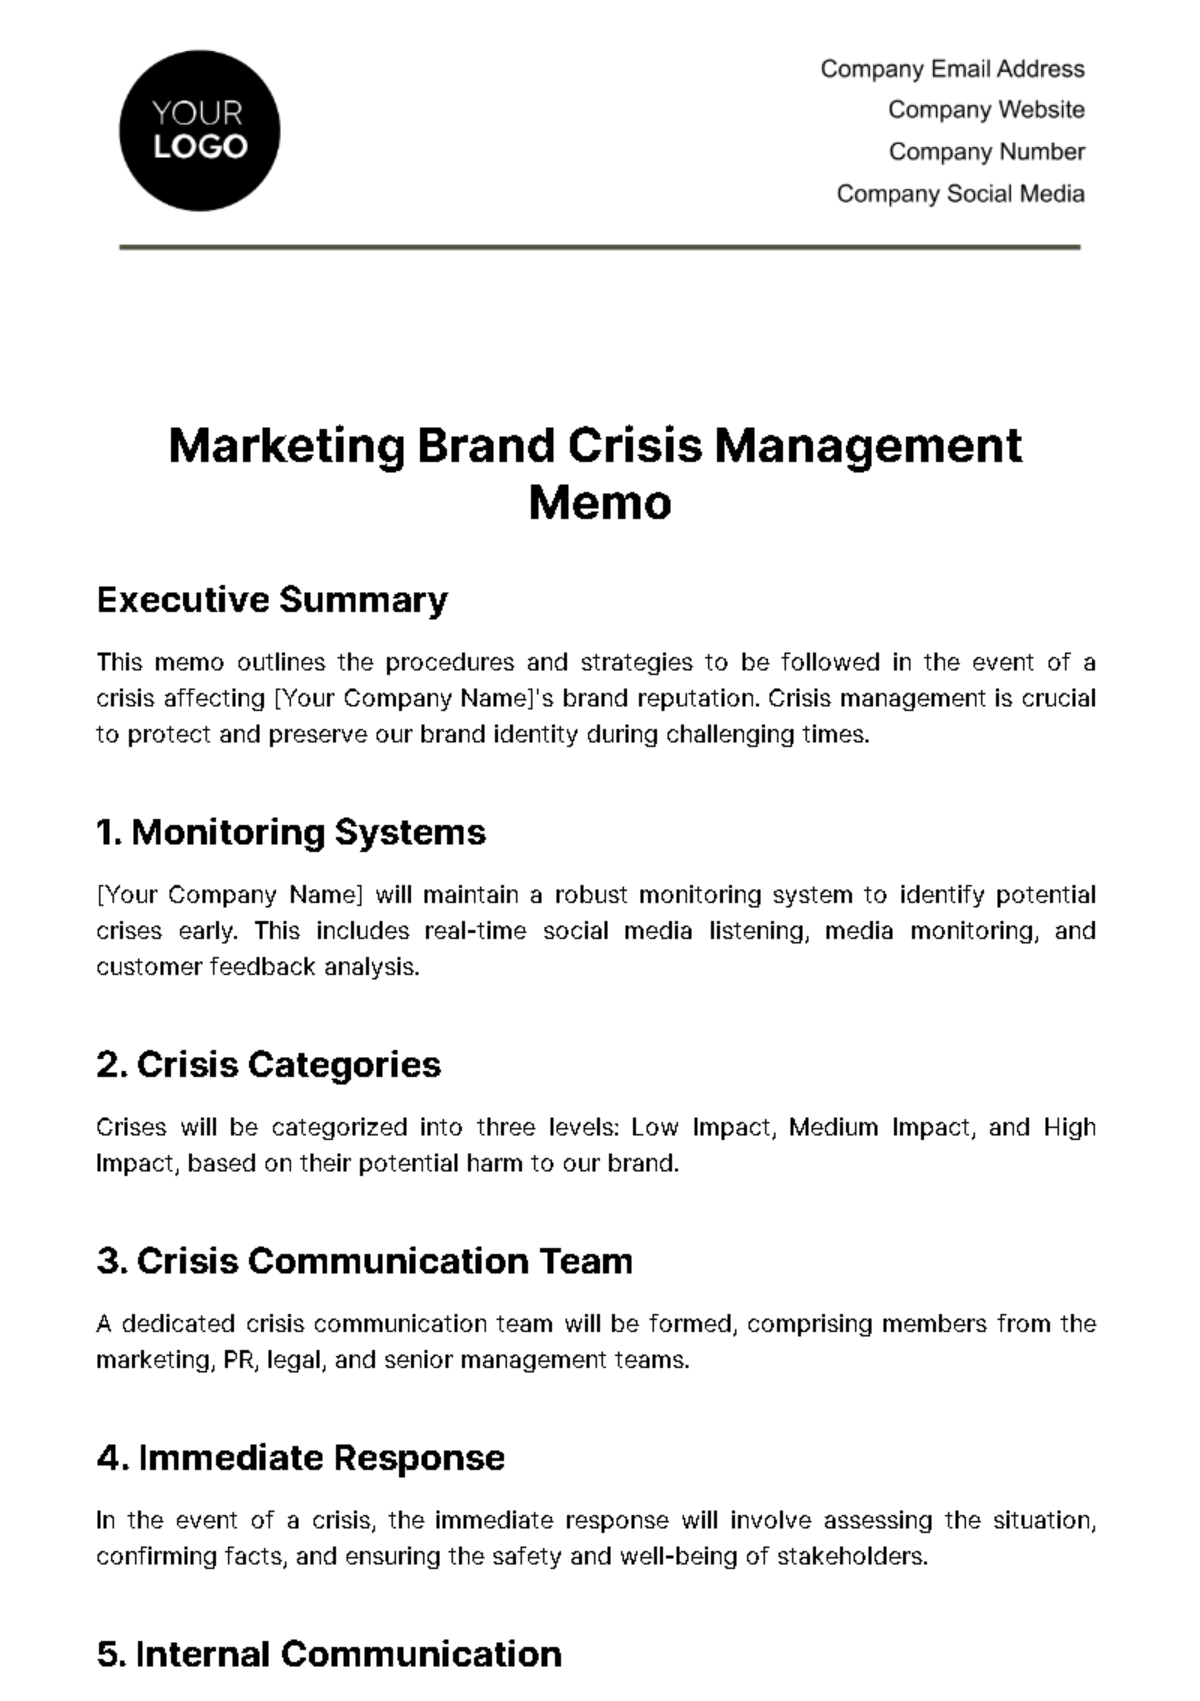 Free Marketing Brand Crisis Management Memo Template